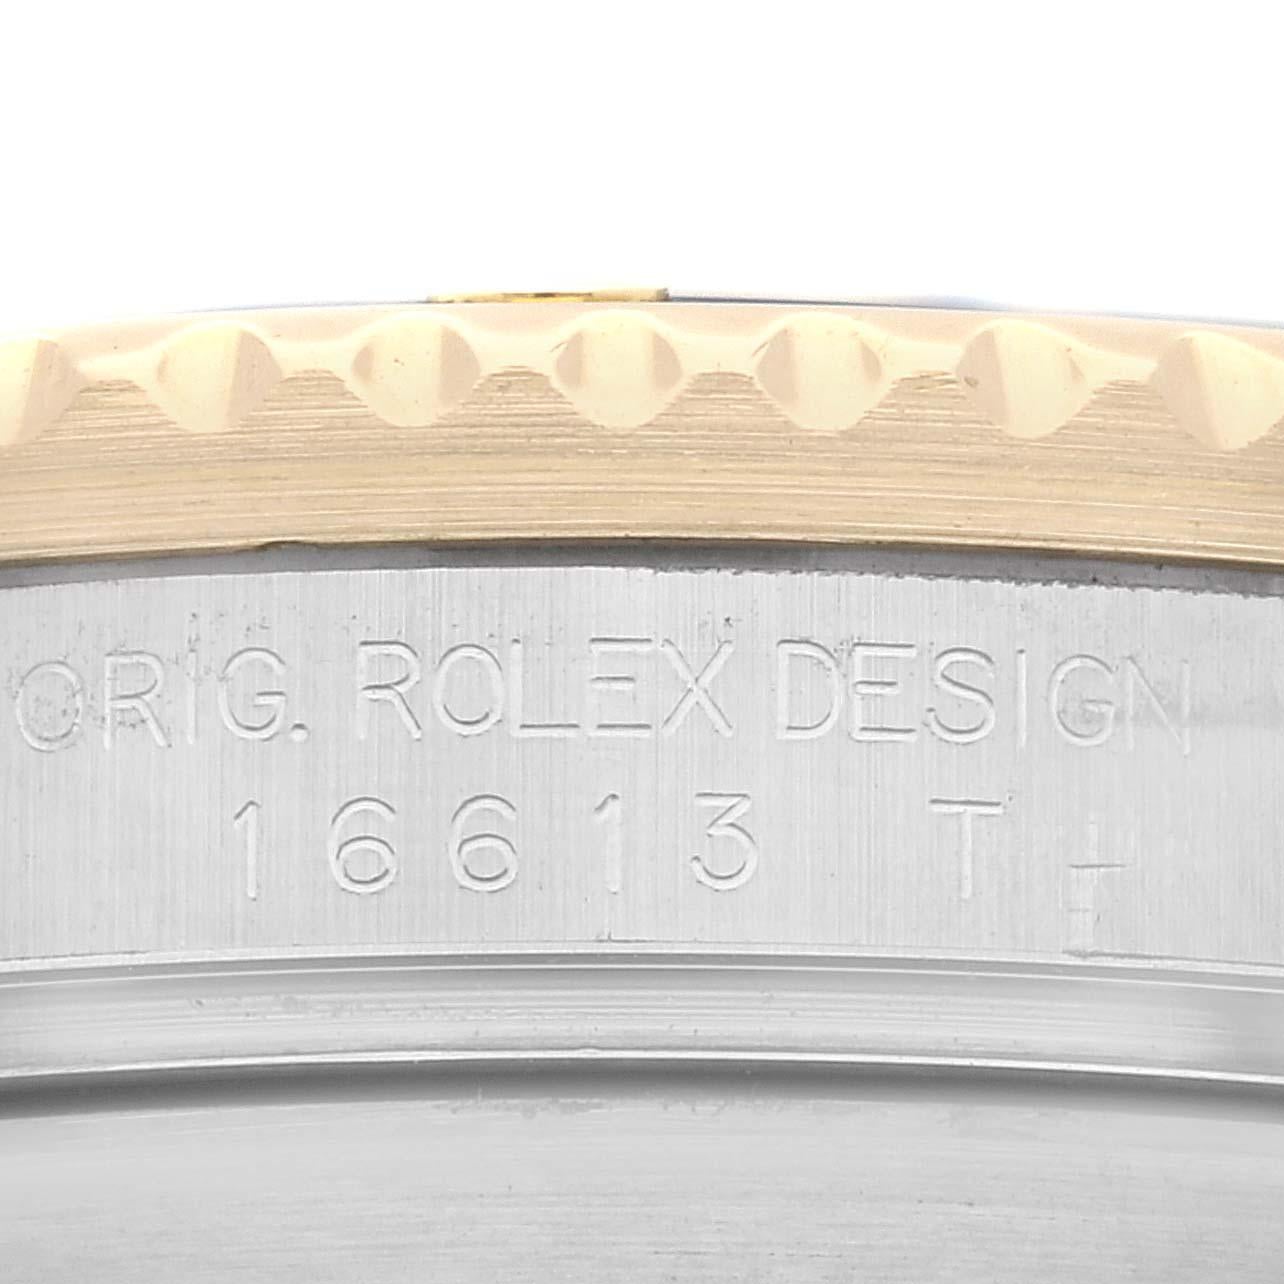 Rolex Submariner Steel Gold Diamond Sapphire Serti Dial Mens Watch 16613 In Good Condition For Sale In Atlanta, GA